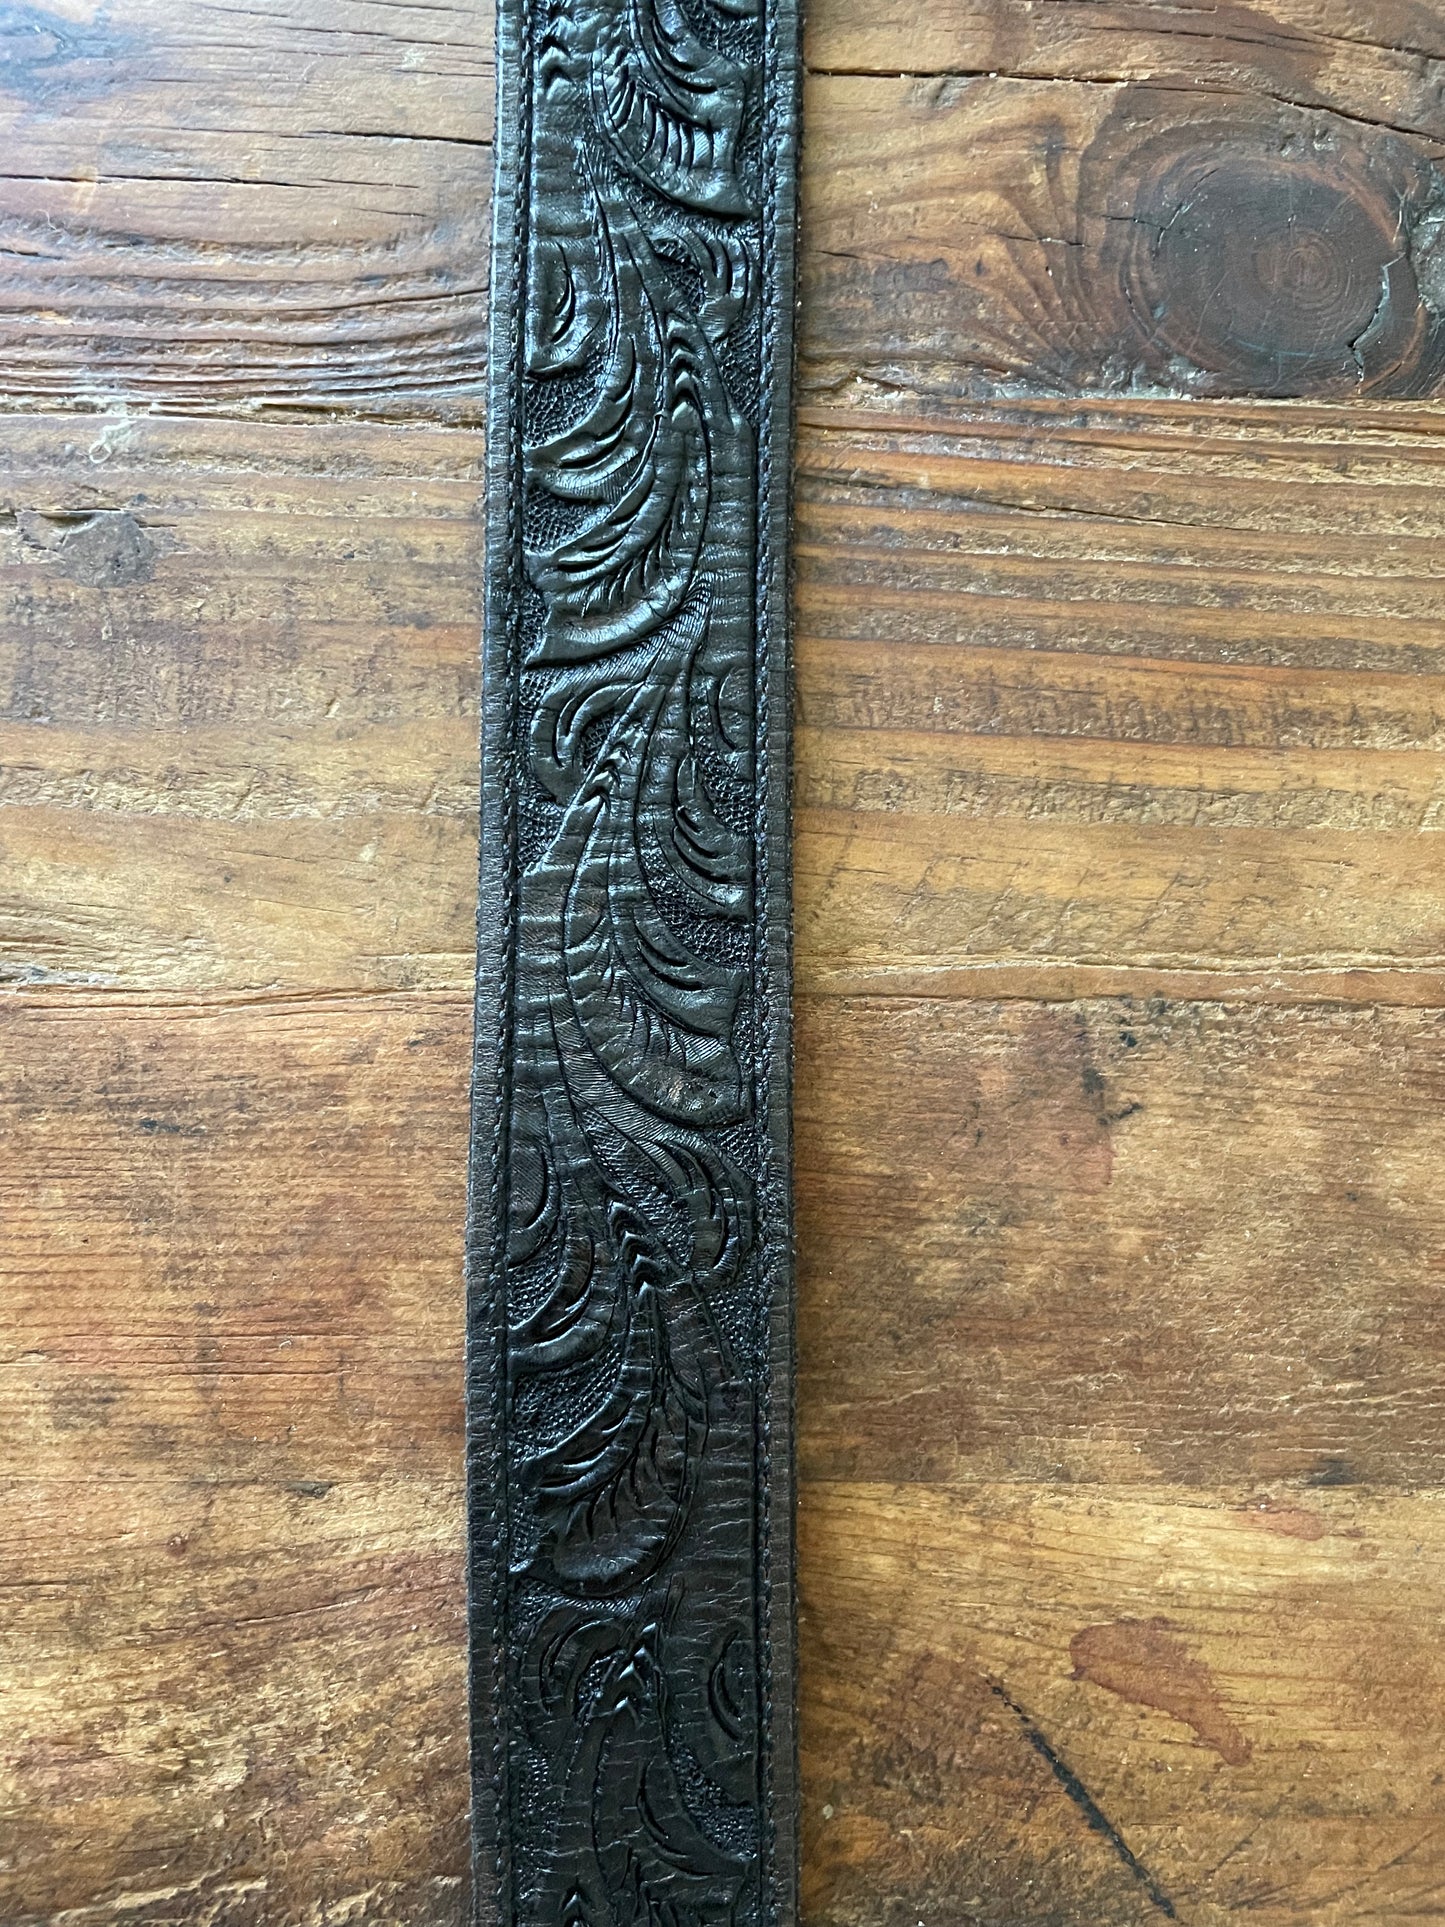 Aged Handtooled Belt